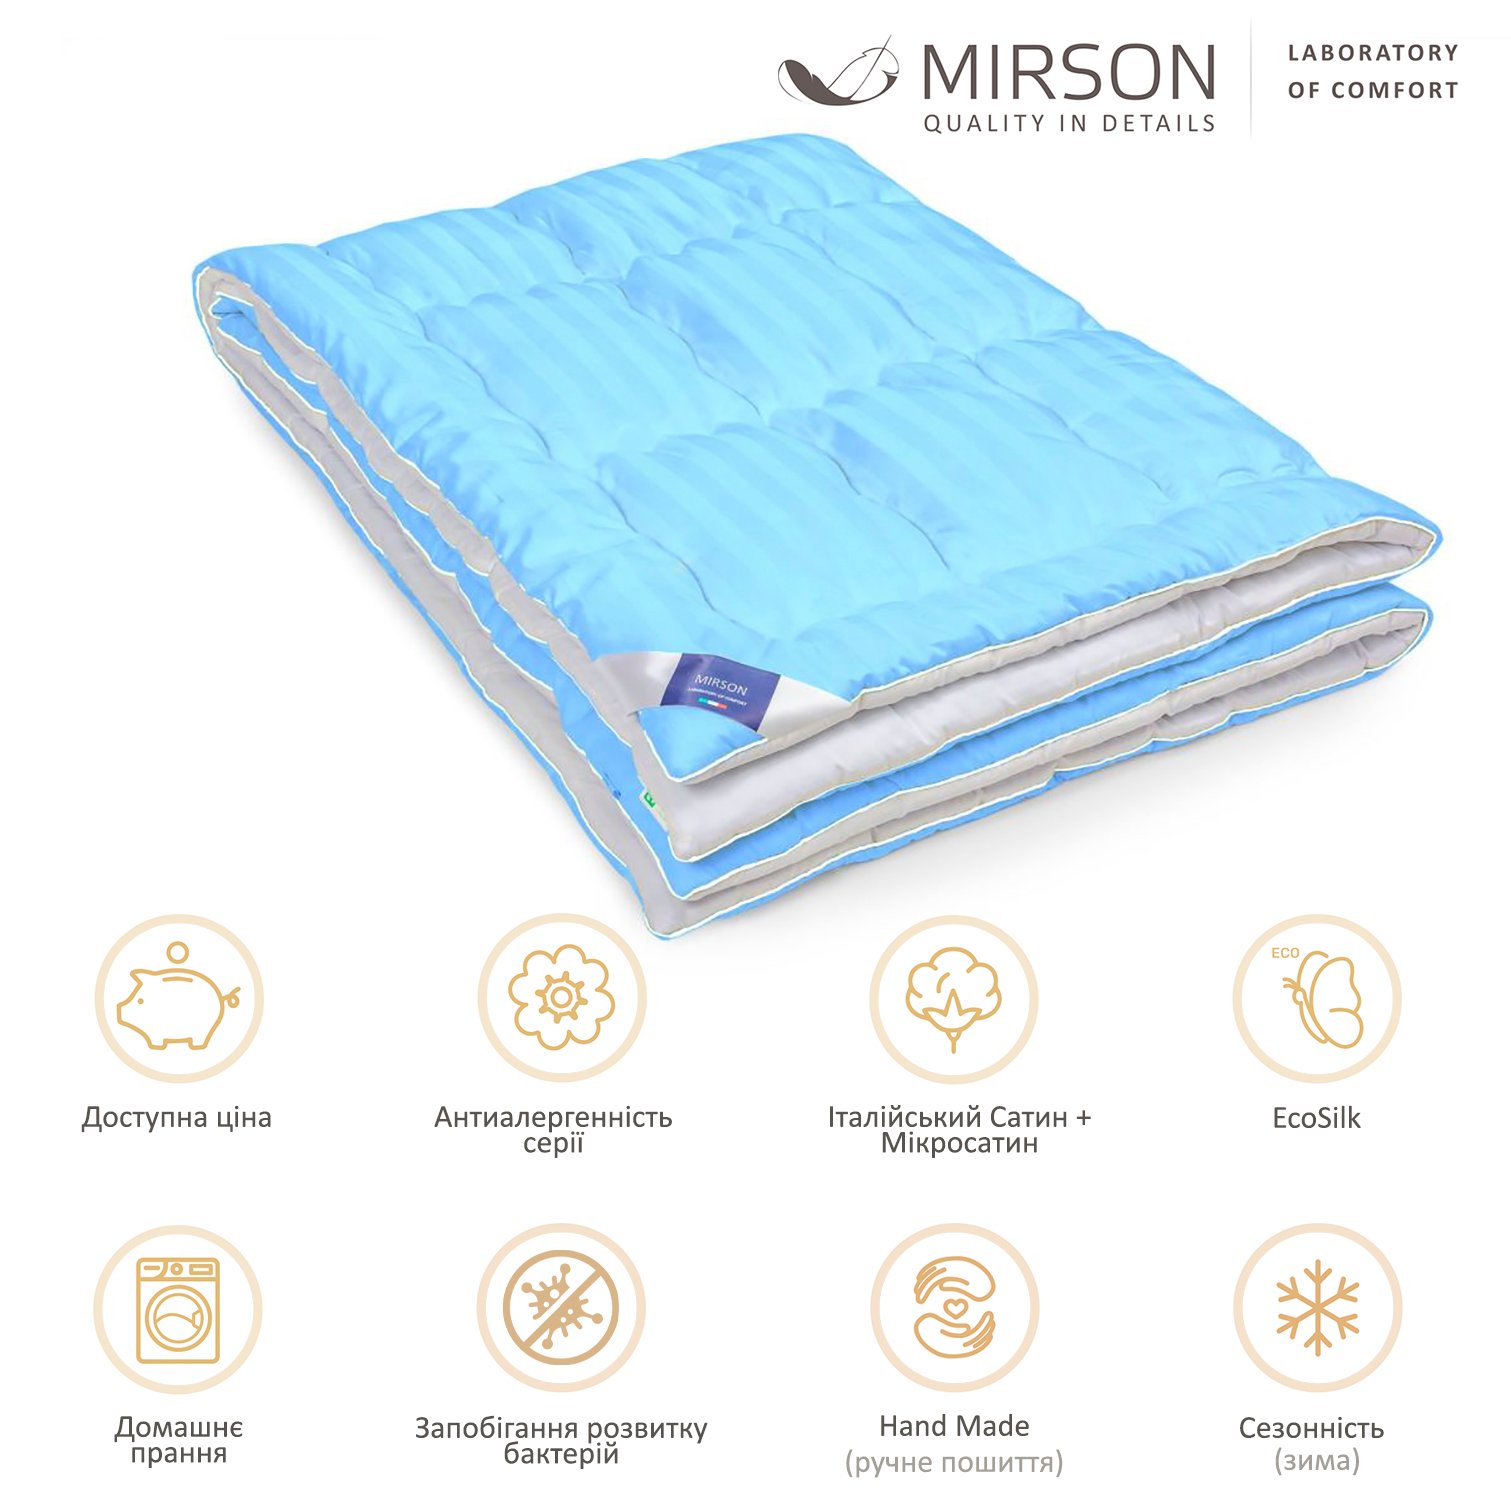 Одеяло антиаллергенное MirSon Valentino Hand Made EcoSilk №0554, зимнее, 110x140 см, бело-голубое (14212310) - фото 5